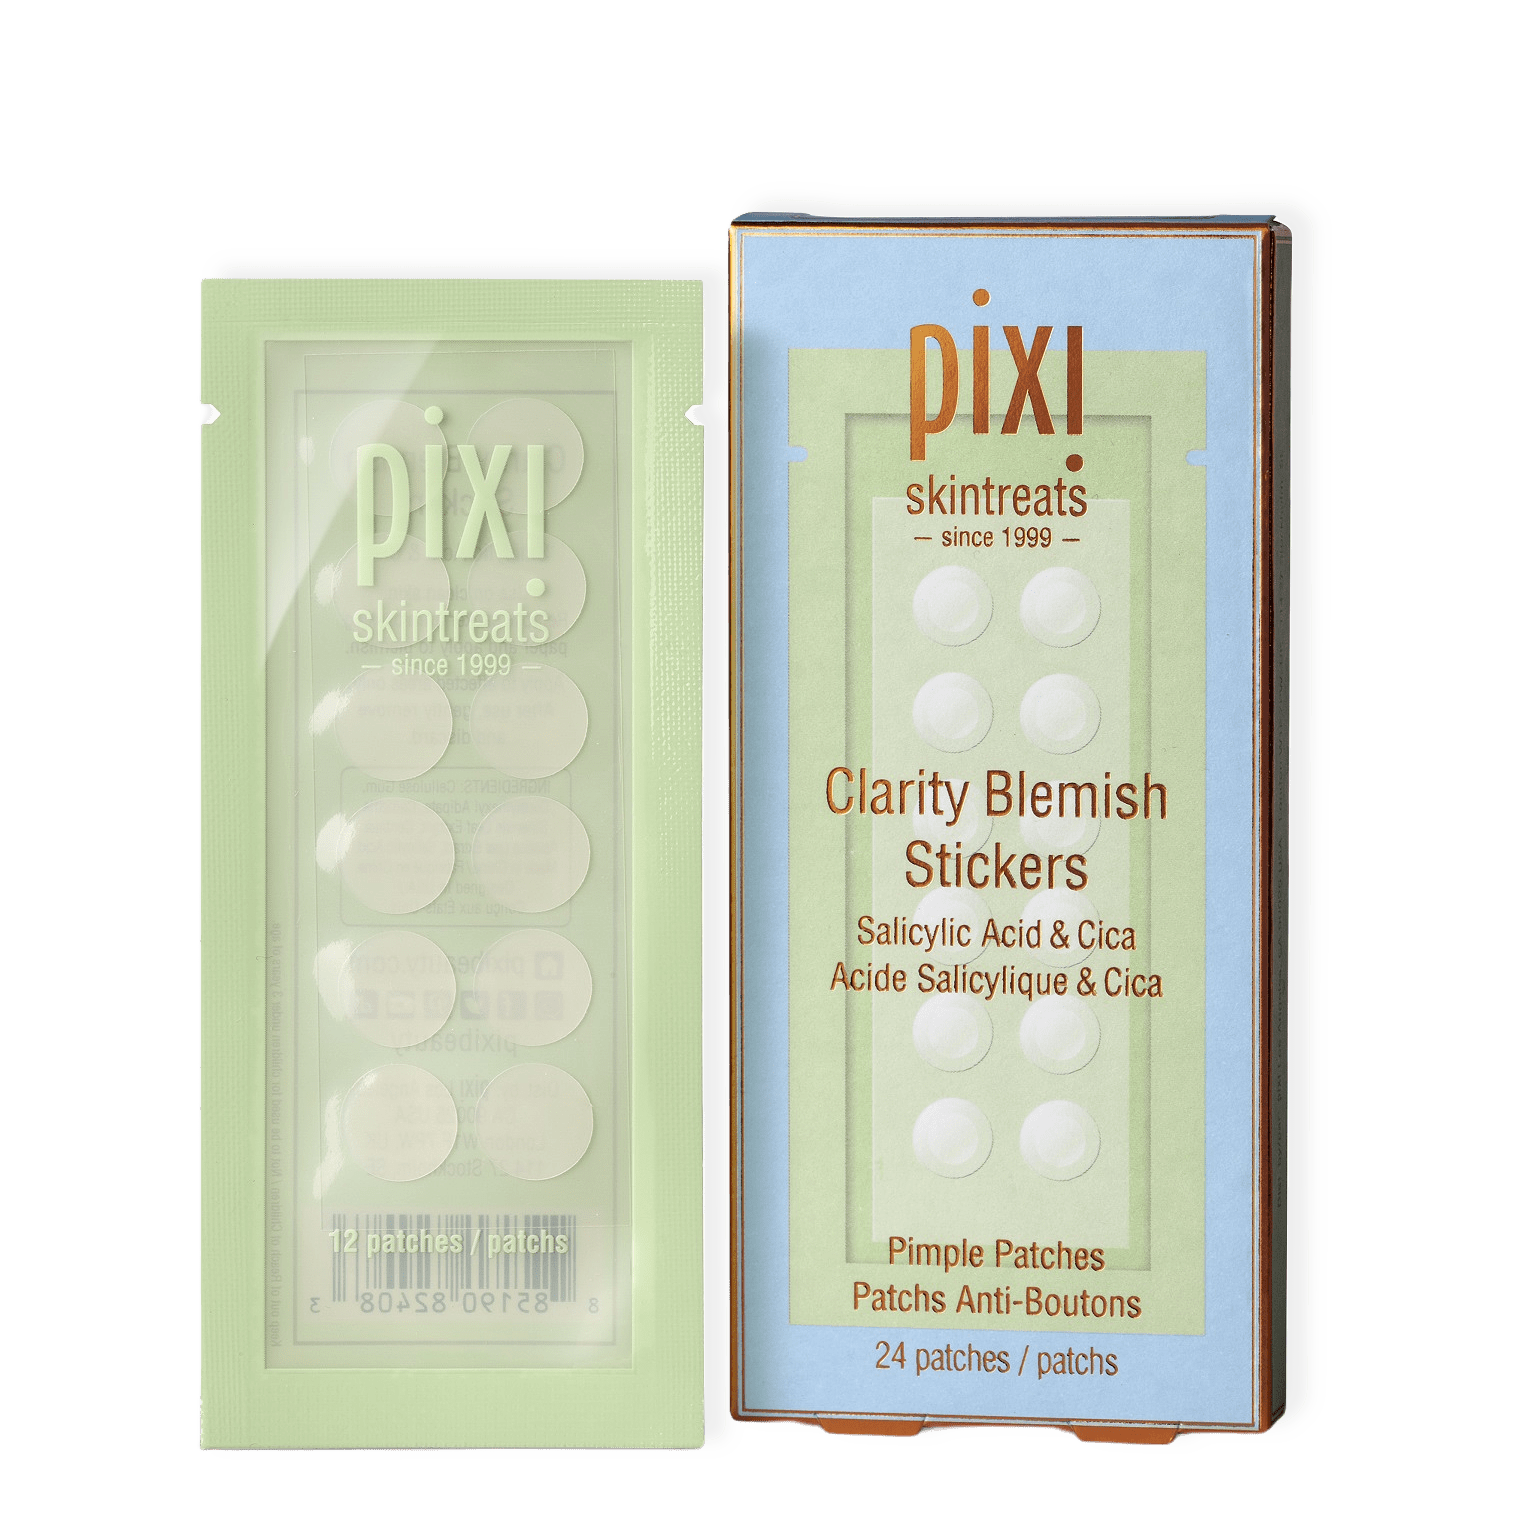 Clarity Blemish Stickers från Pixi